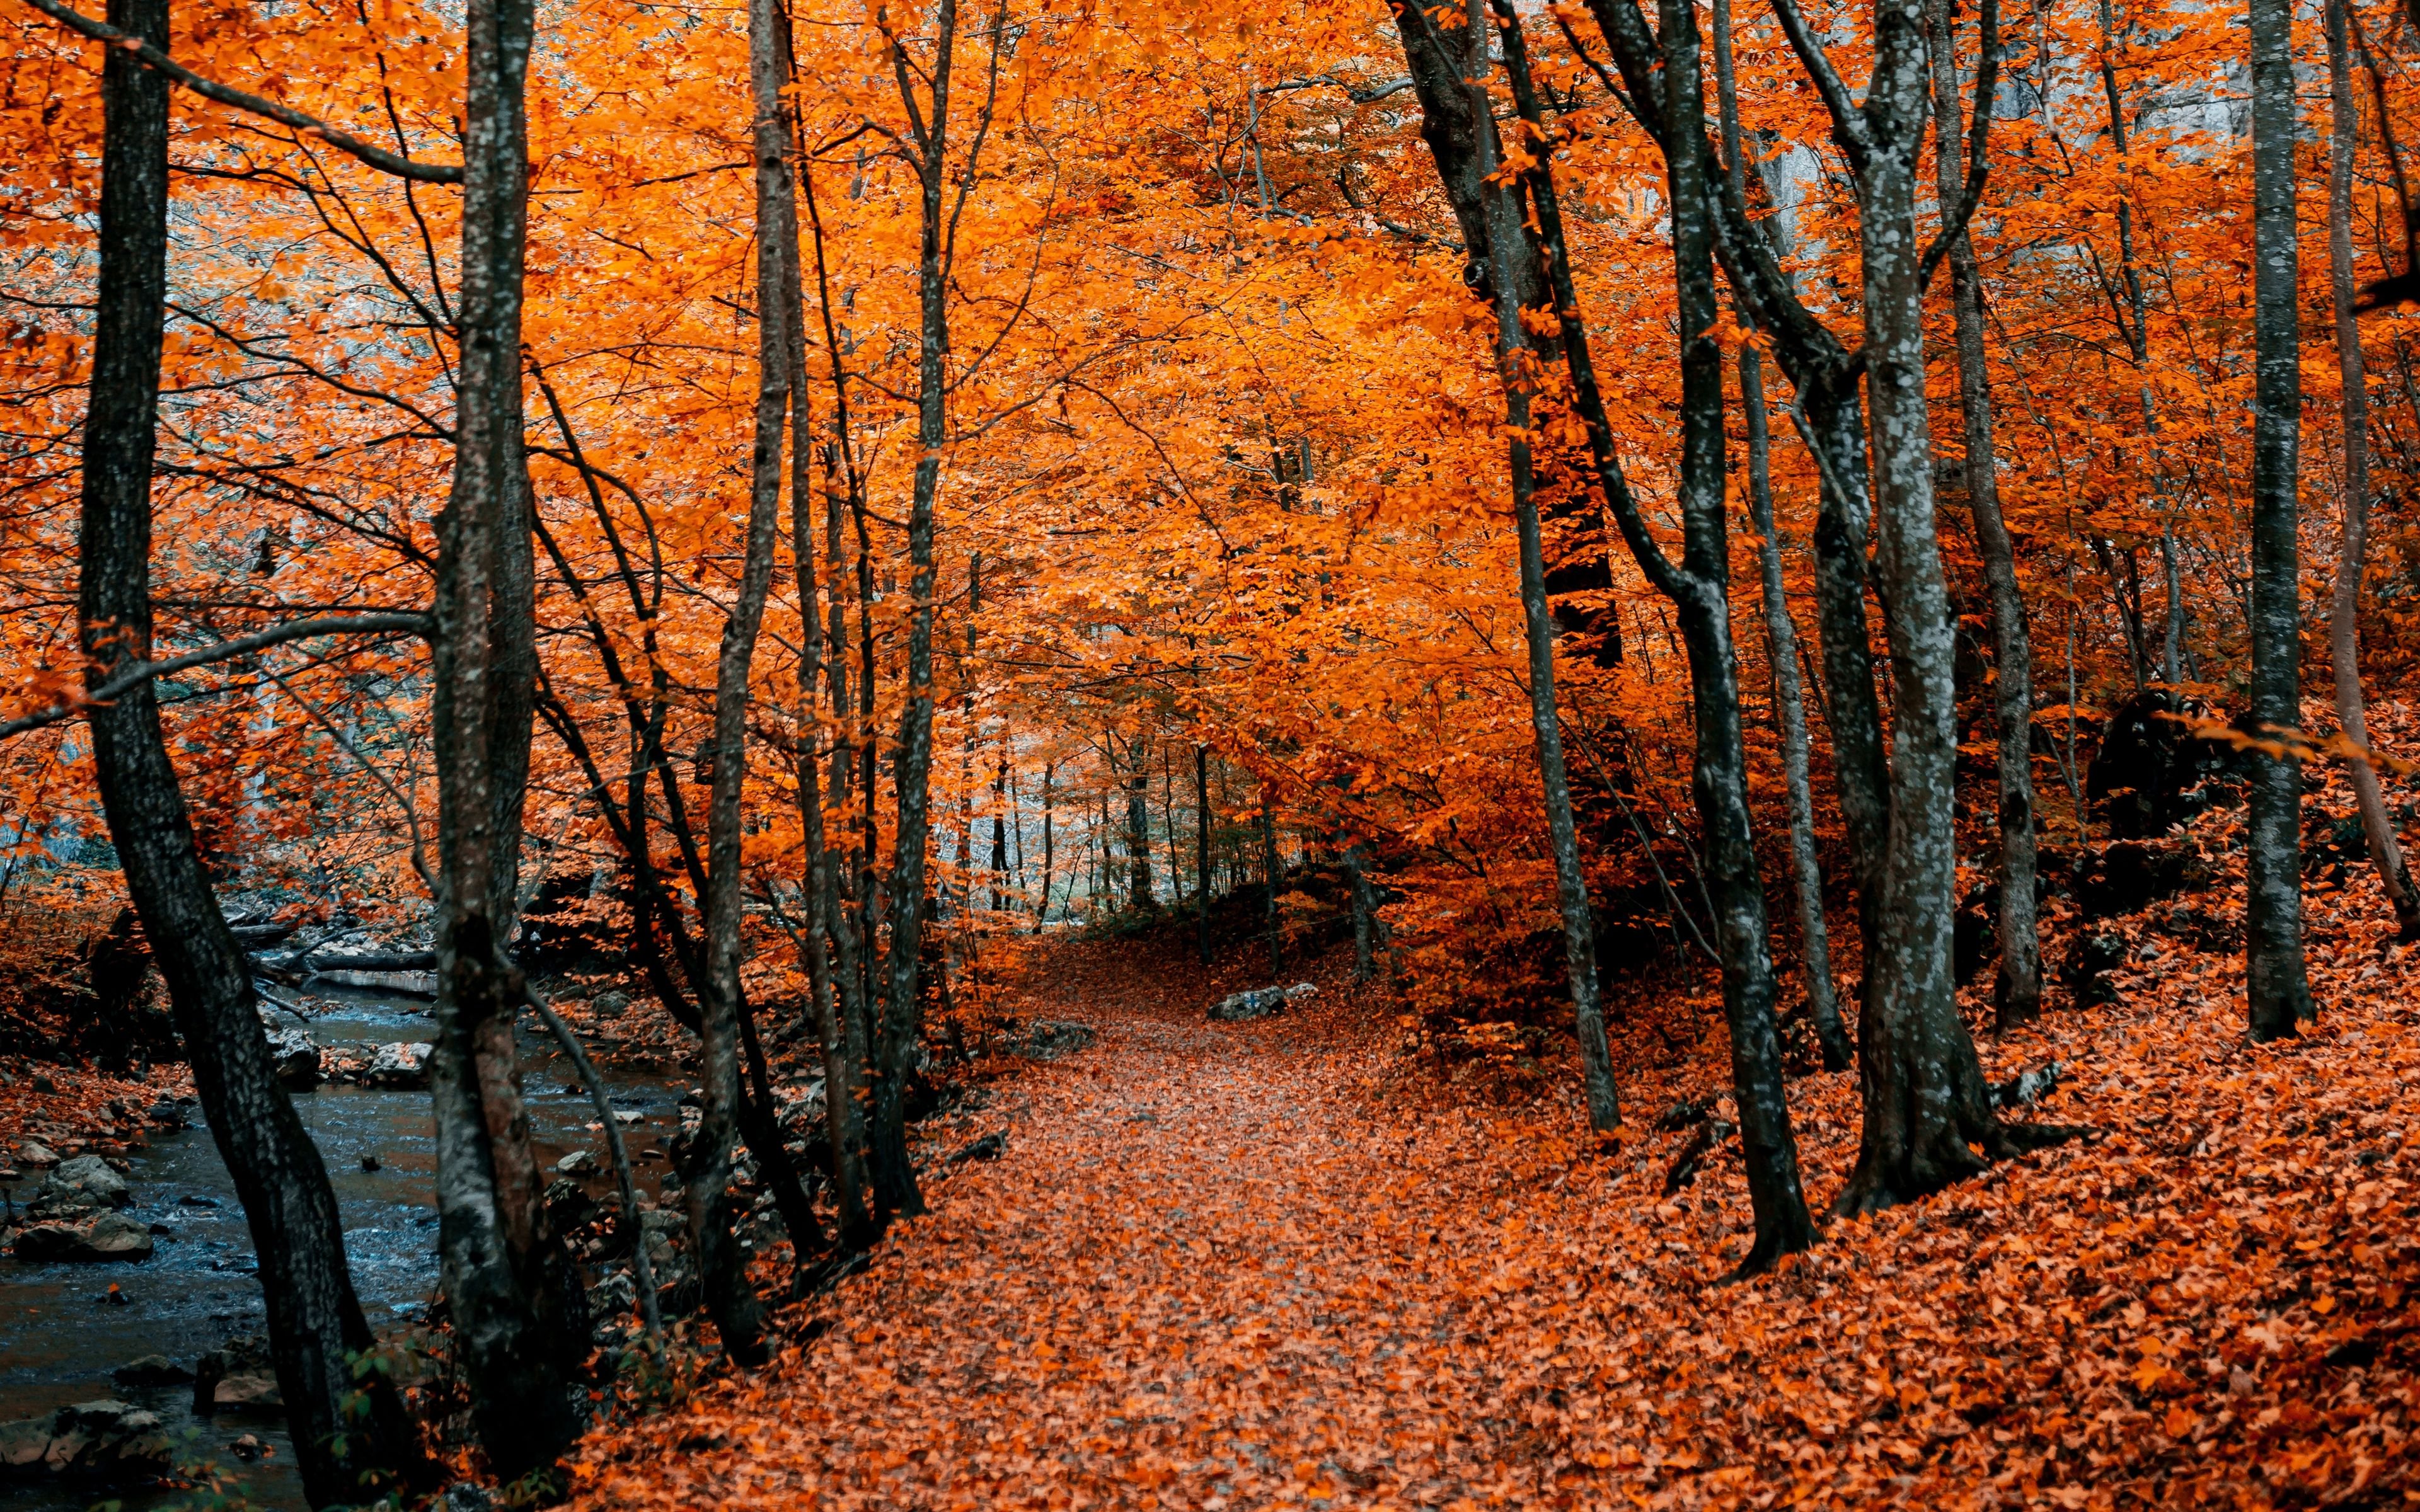 Fall definition. Осень картинки. Осенний лес. Оранжевый лес. Осень в лесу.